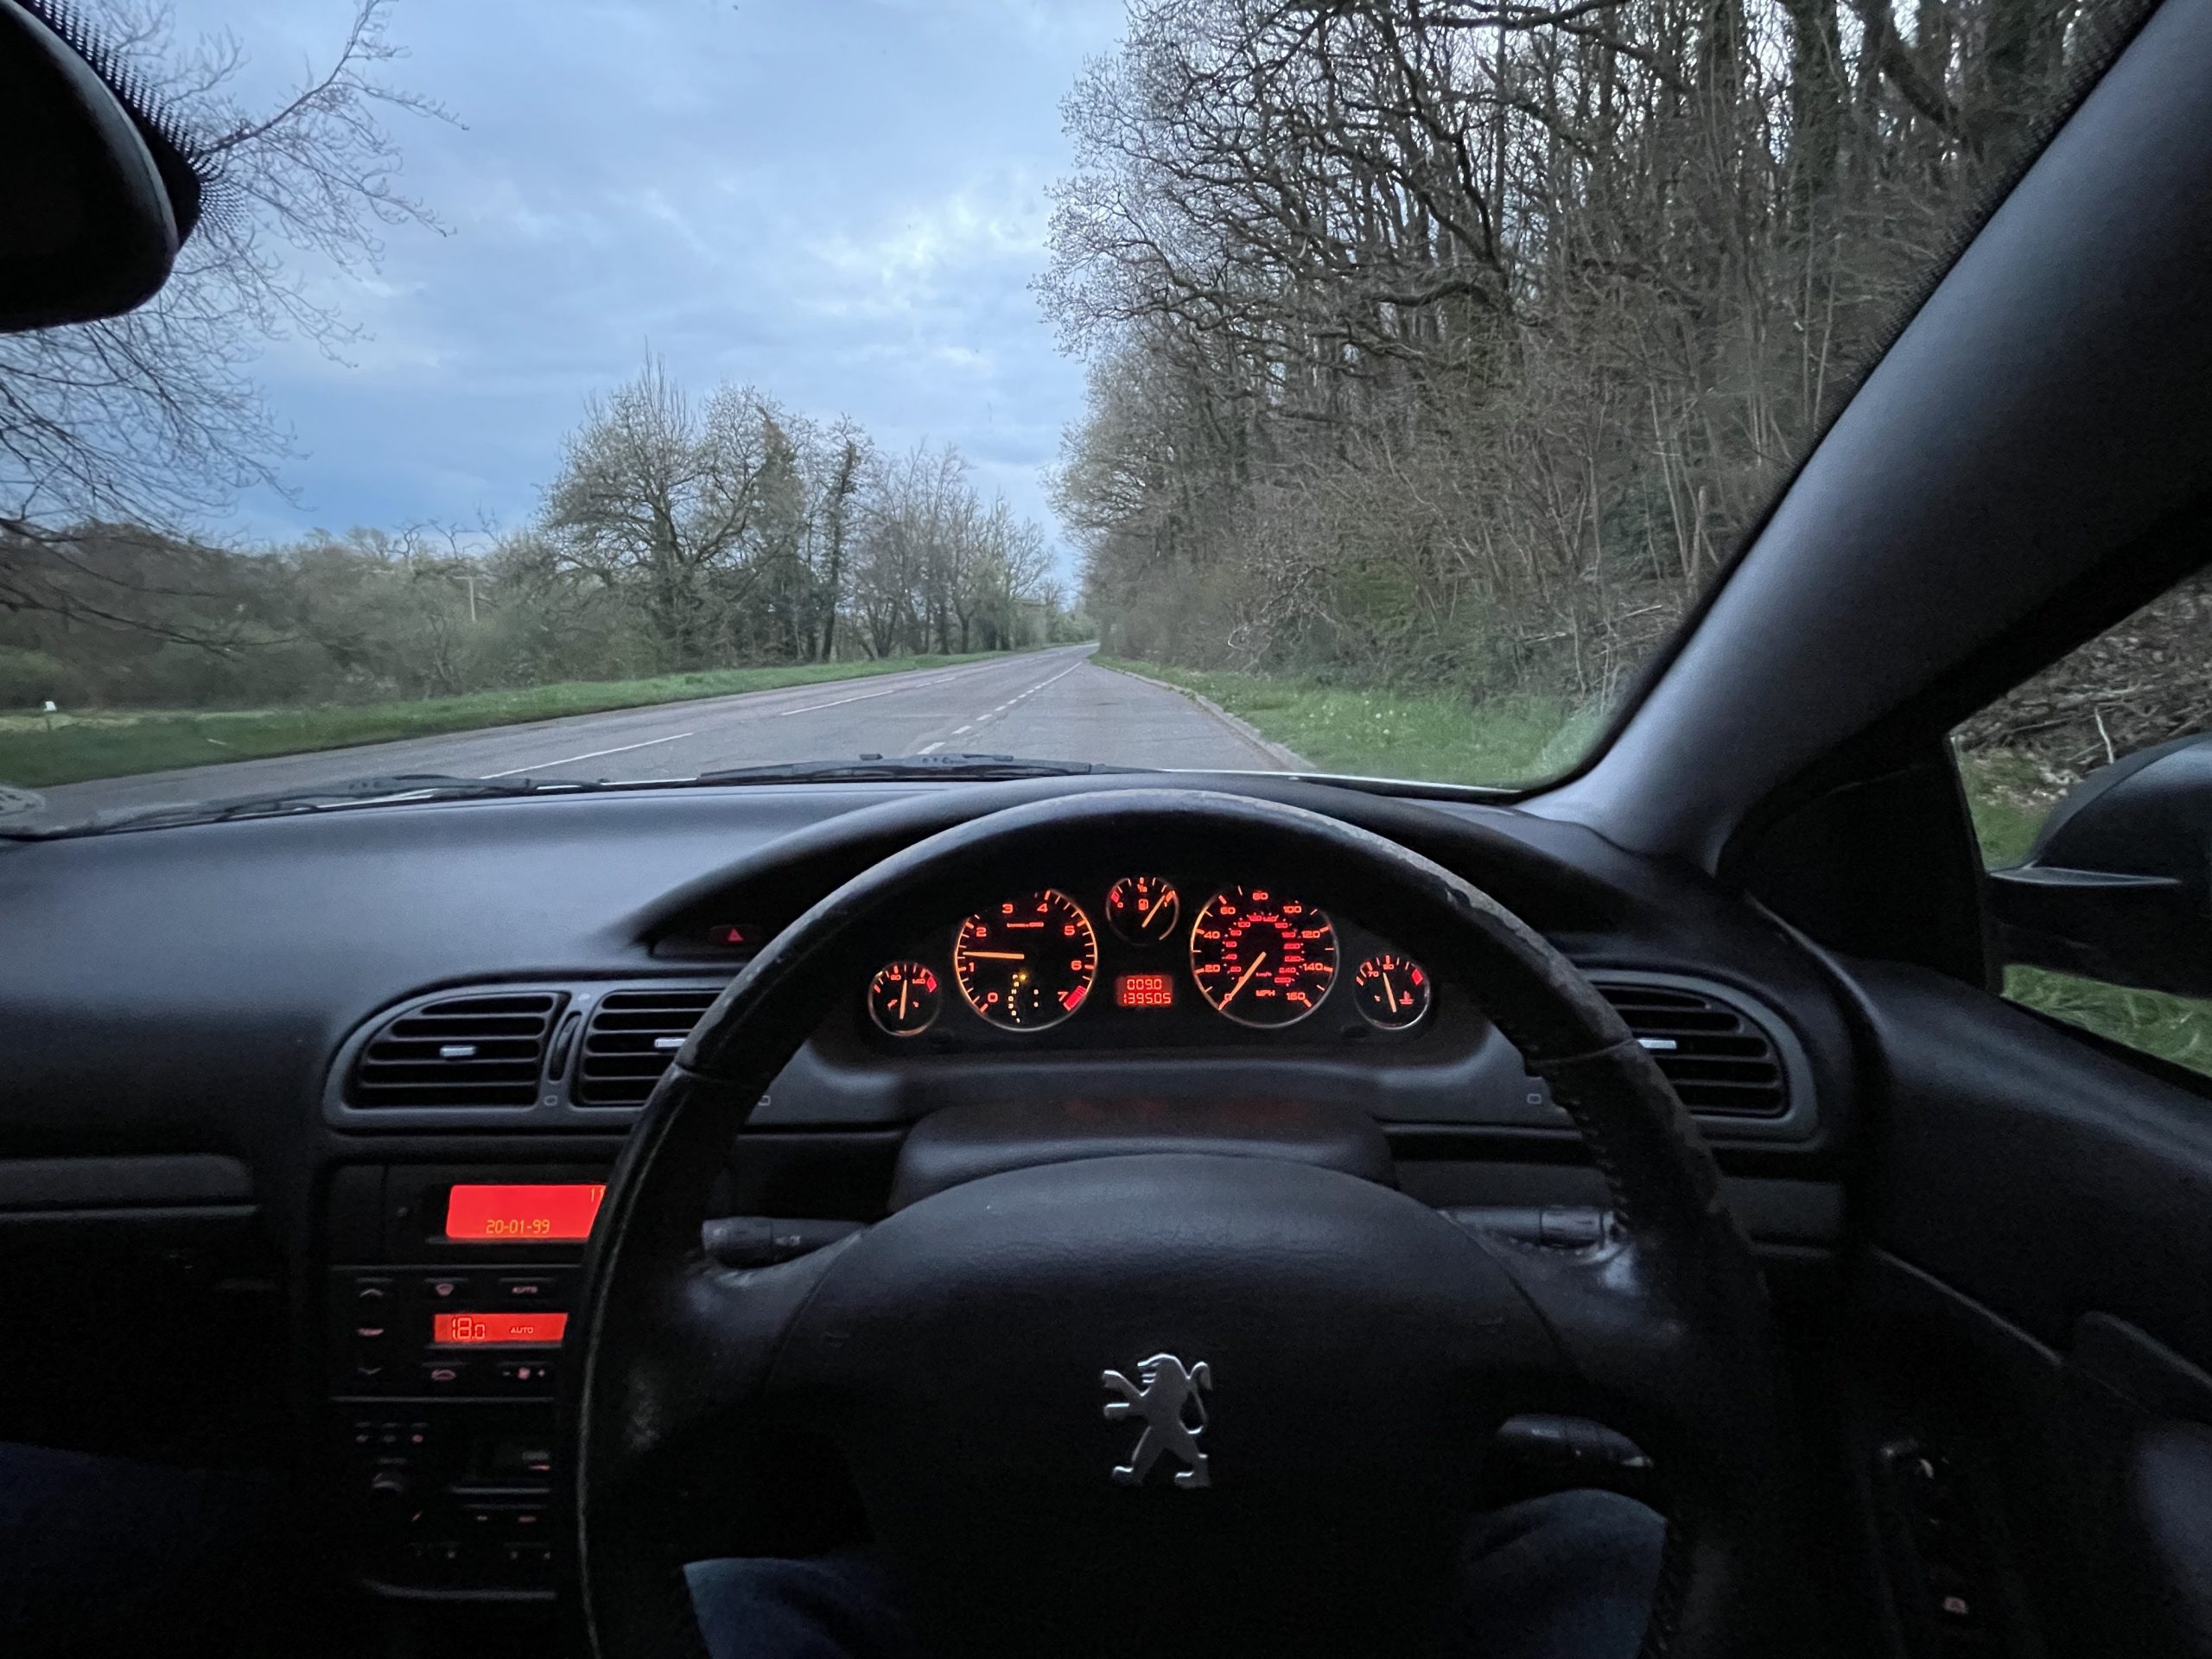 Peugeot 406 Coupe interior